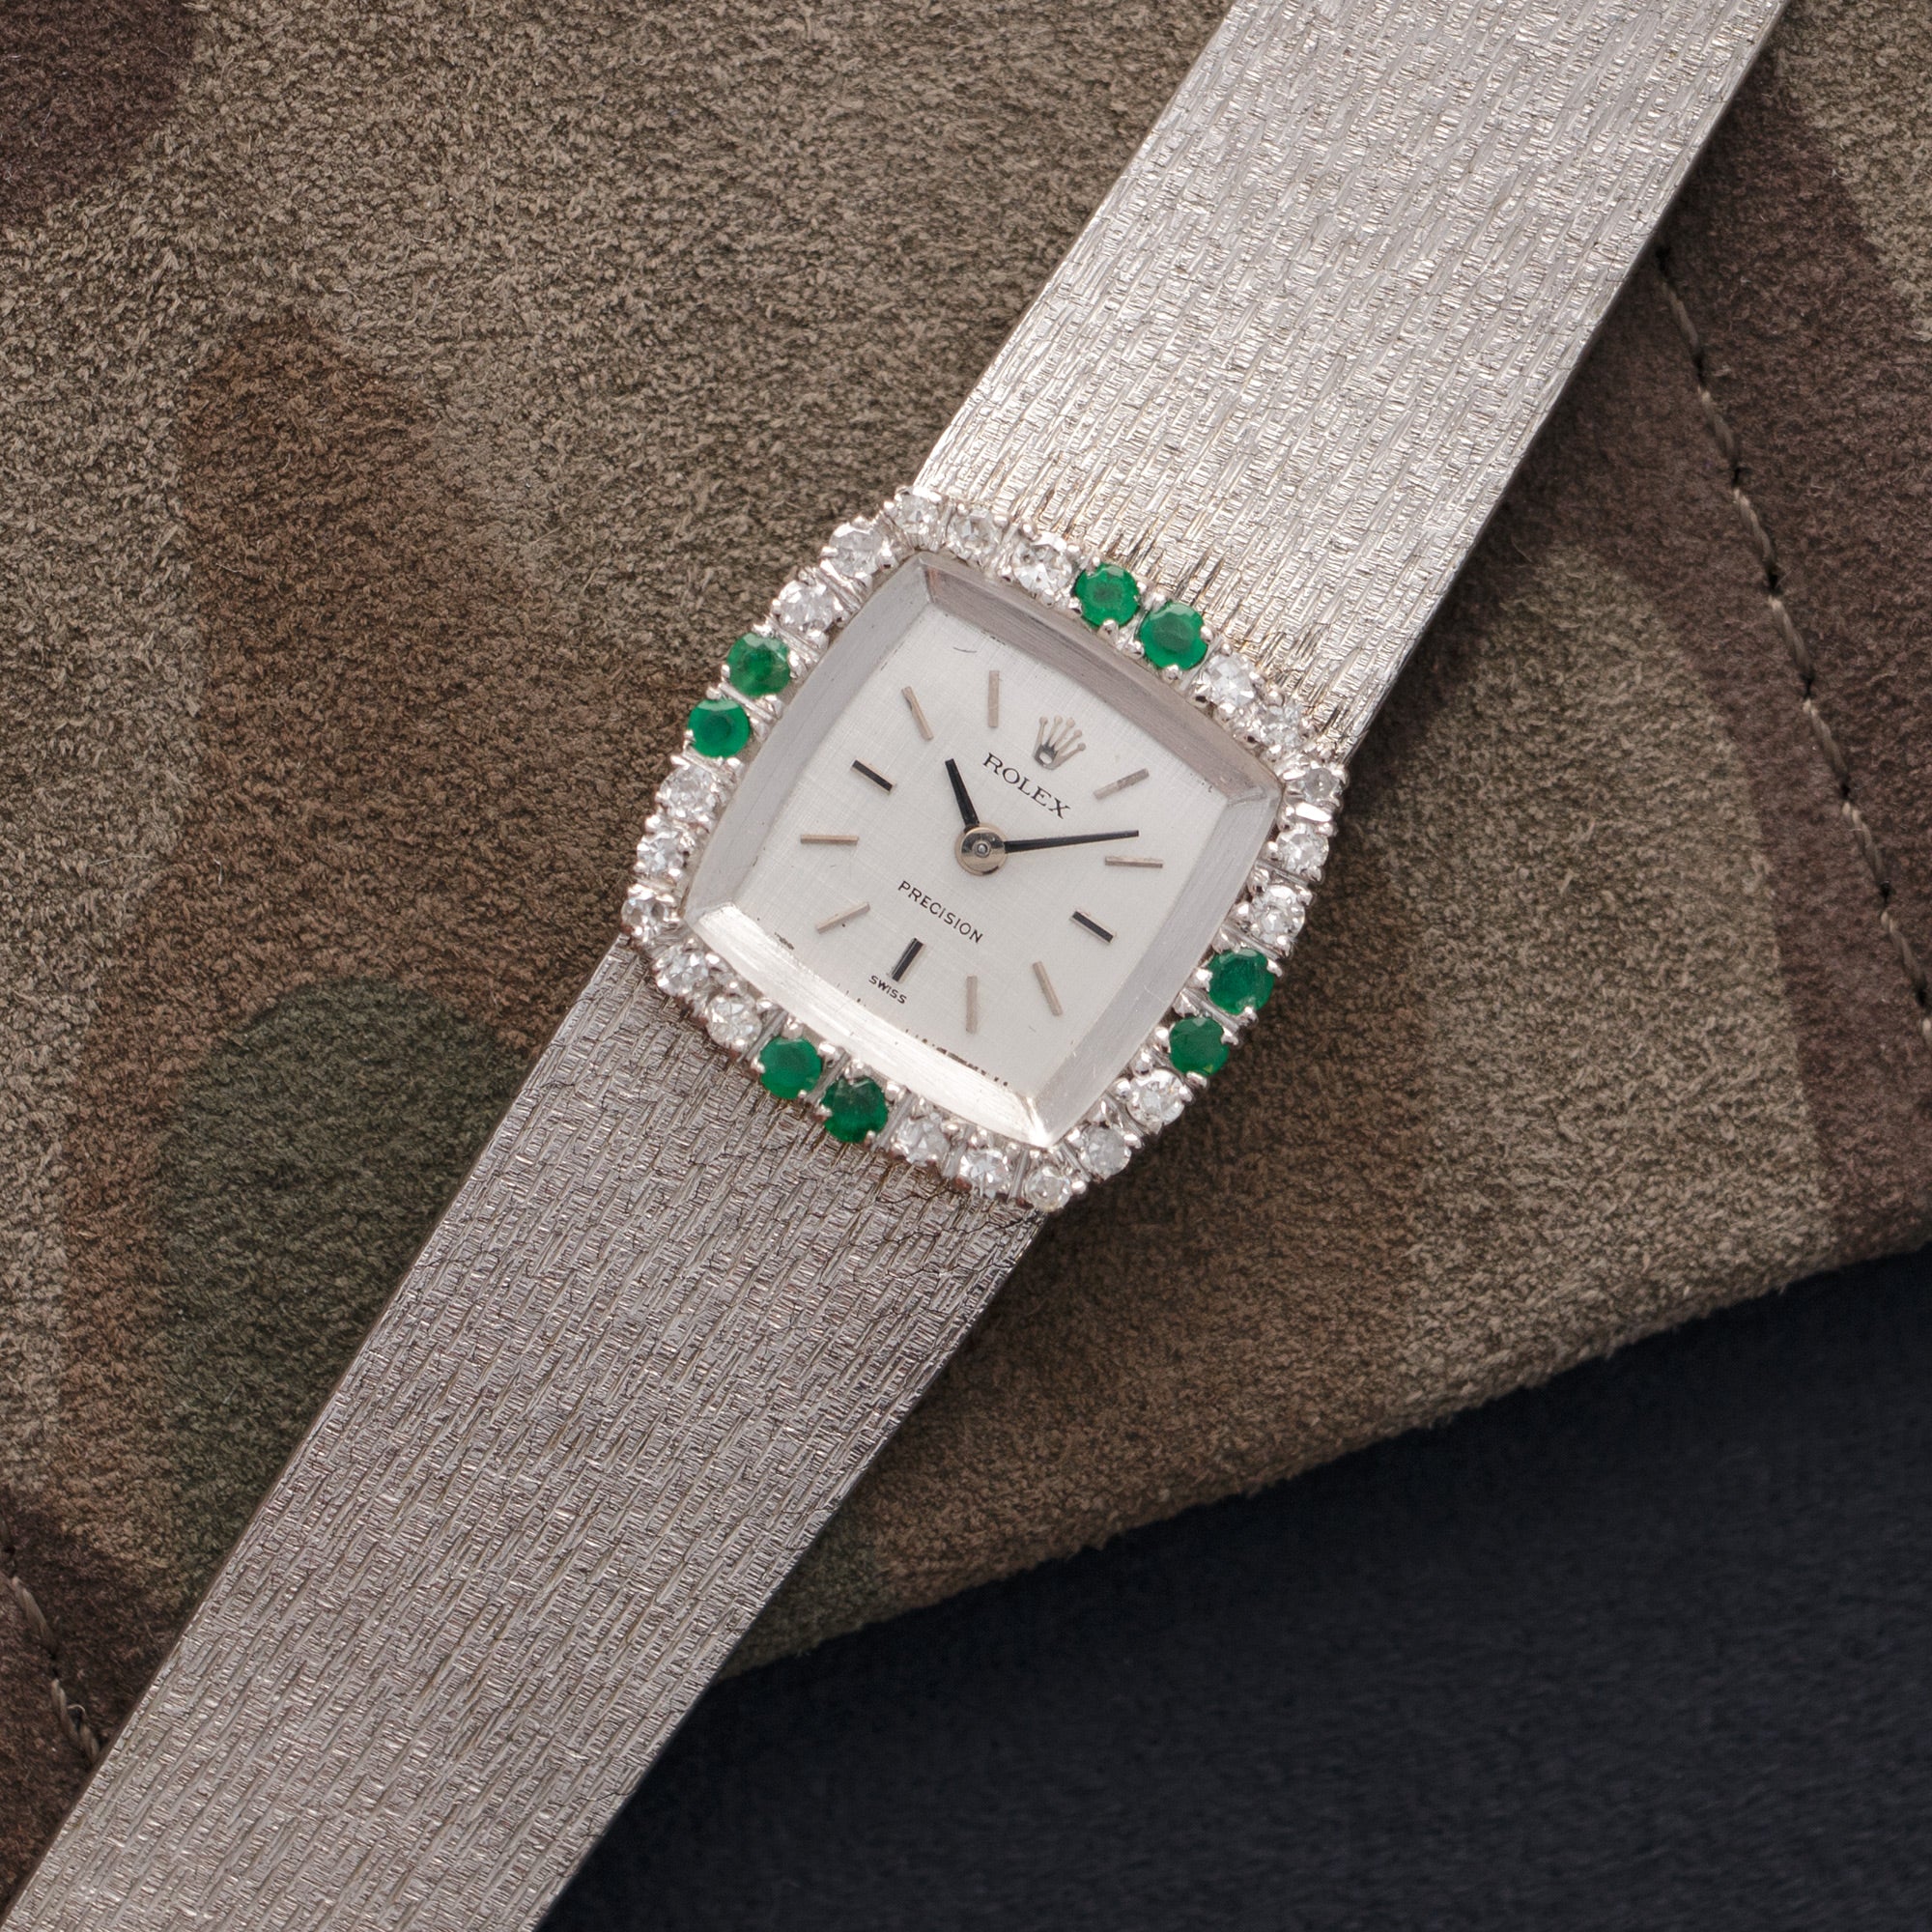 Rolex White Gold Precision Diamond &amp; Emerald Watch Ref. 2628